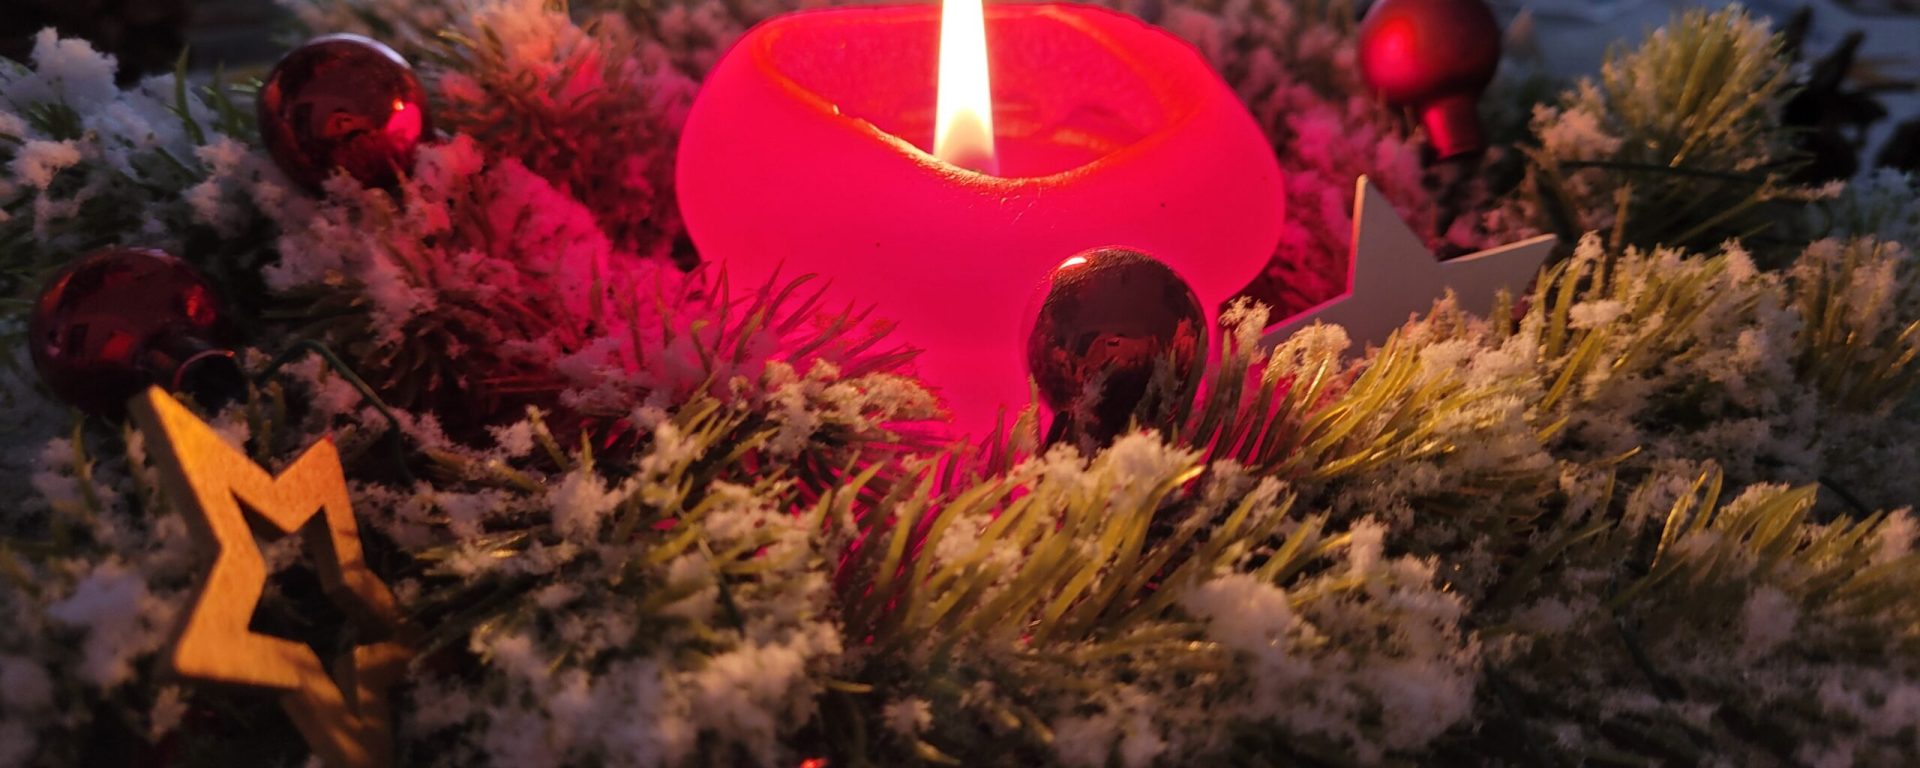 Adventskranz mit Kerze